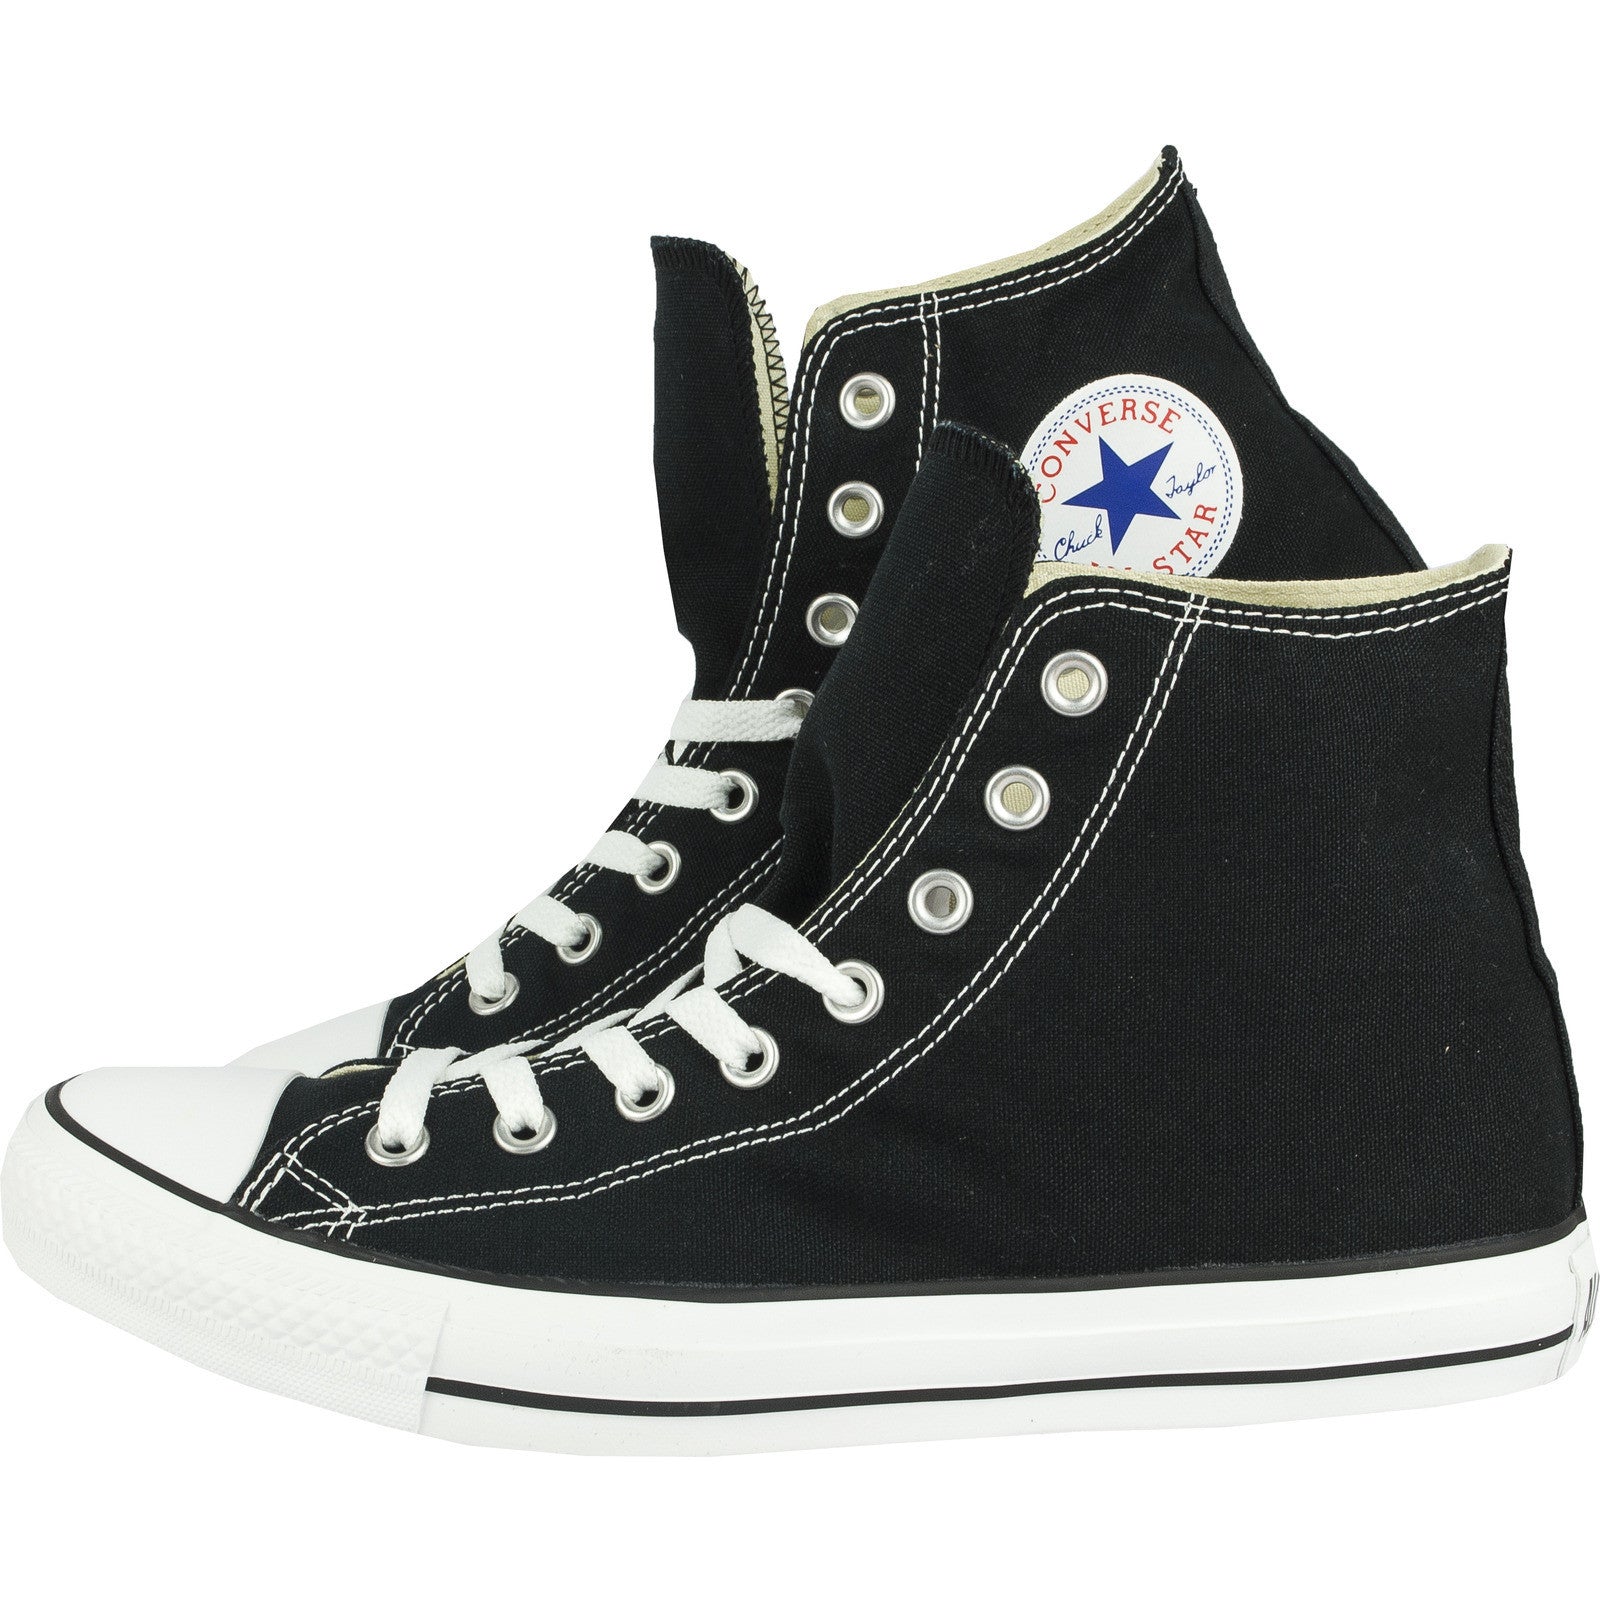 classic black converse shoes